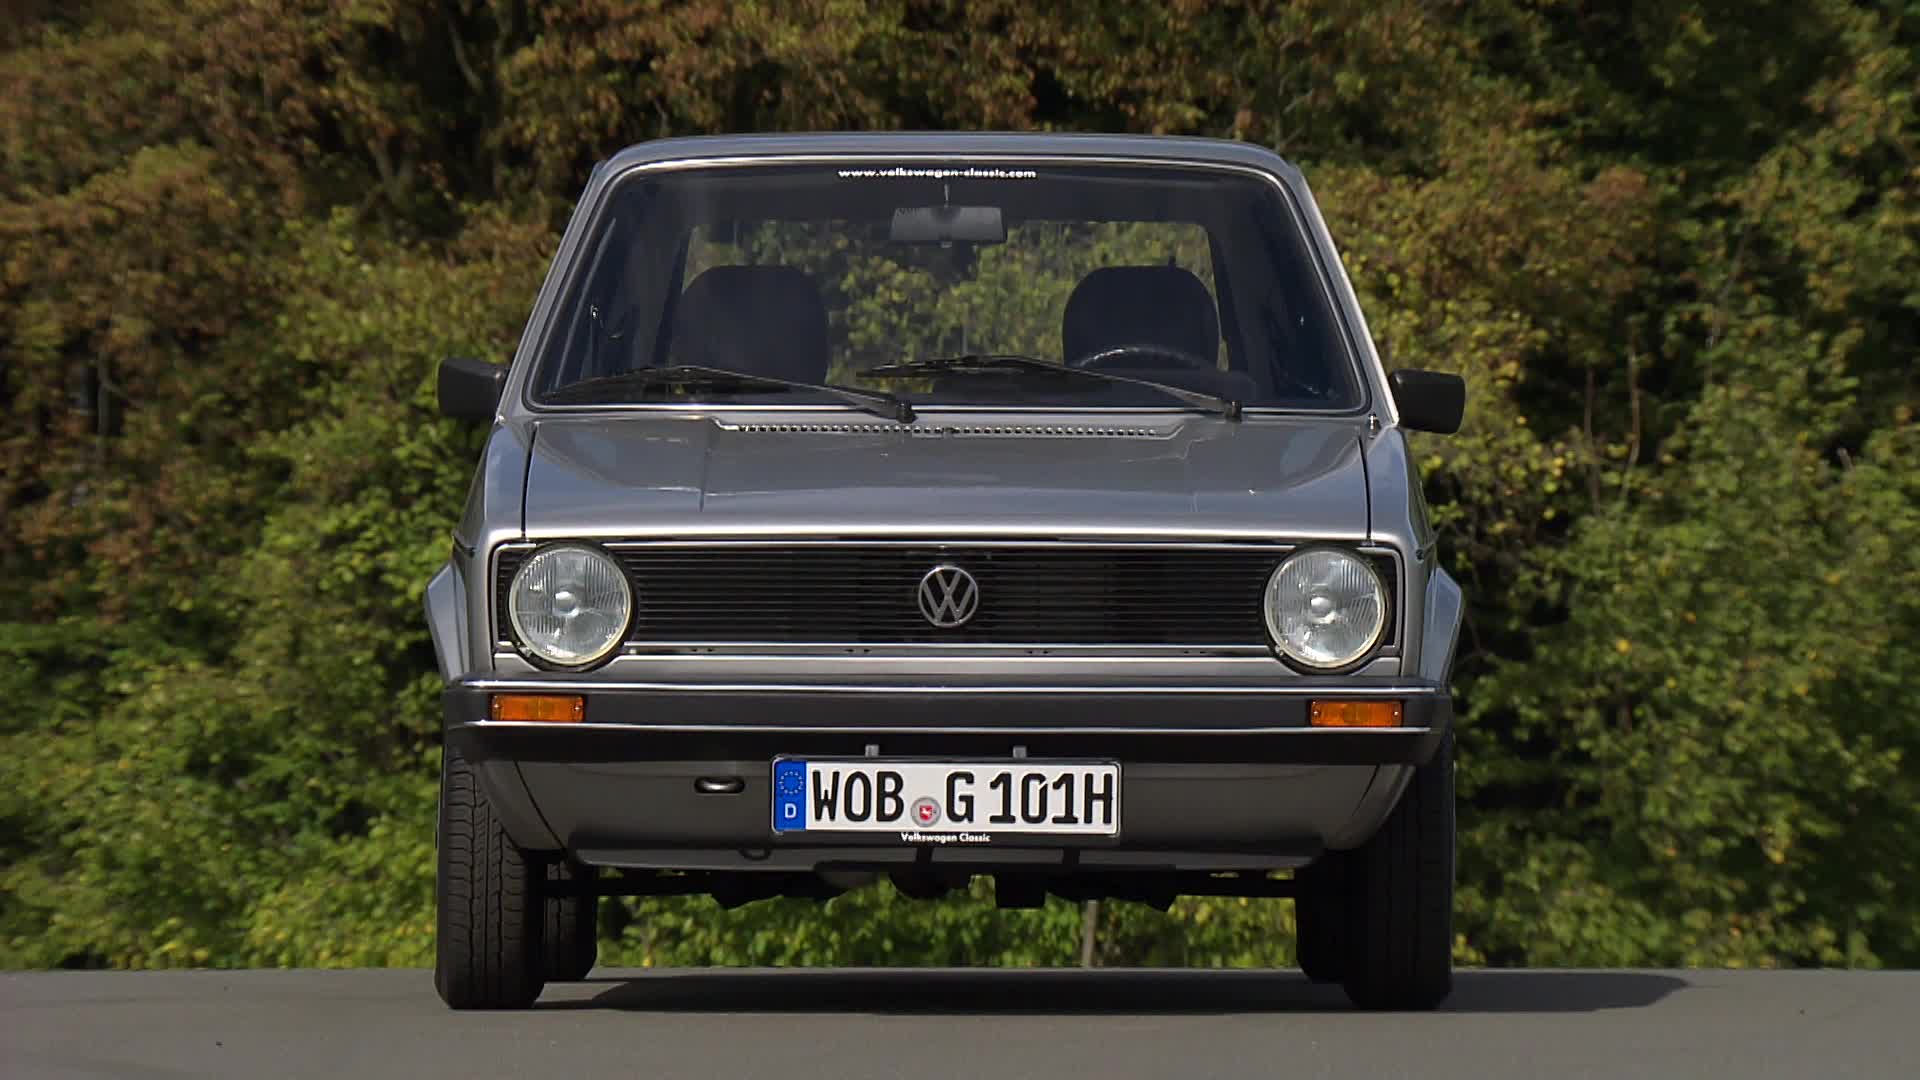 Volkswagen Golf – Generation one to seven